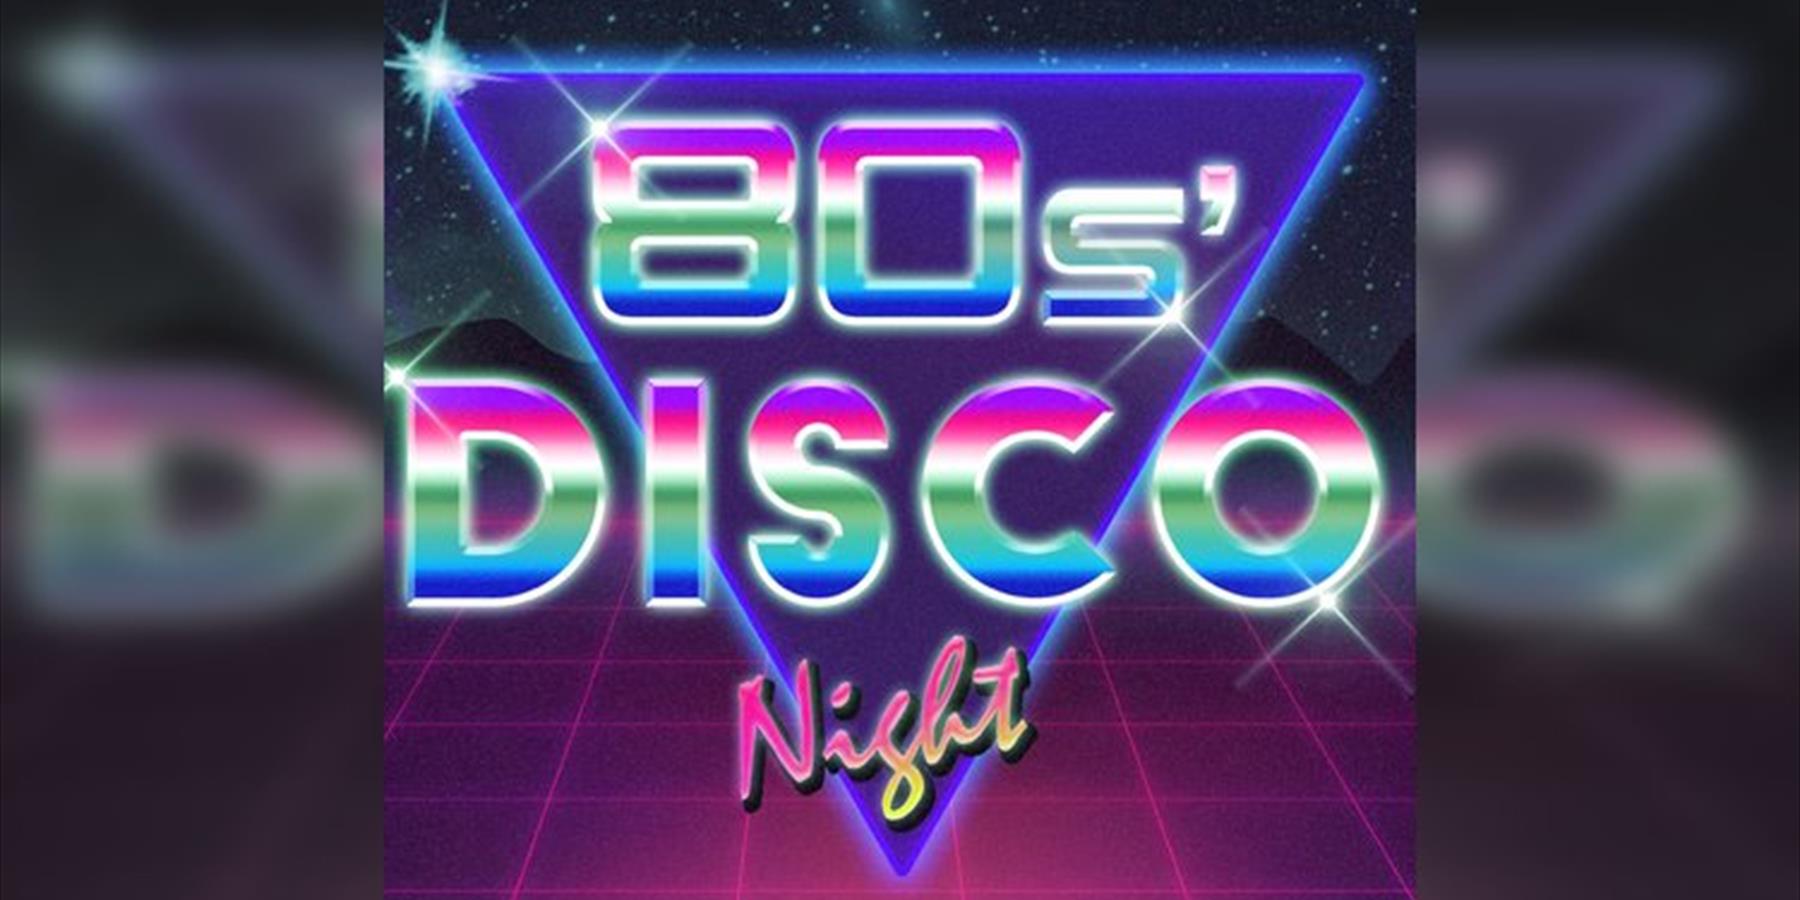 A Kick Up The Eighties Disco